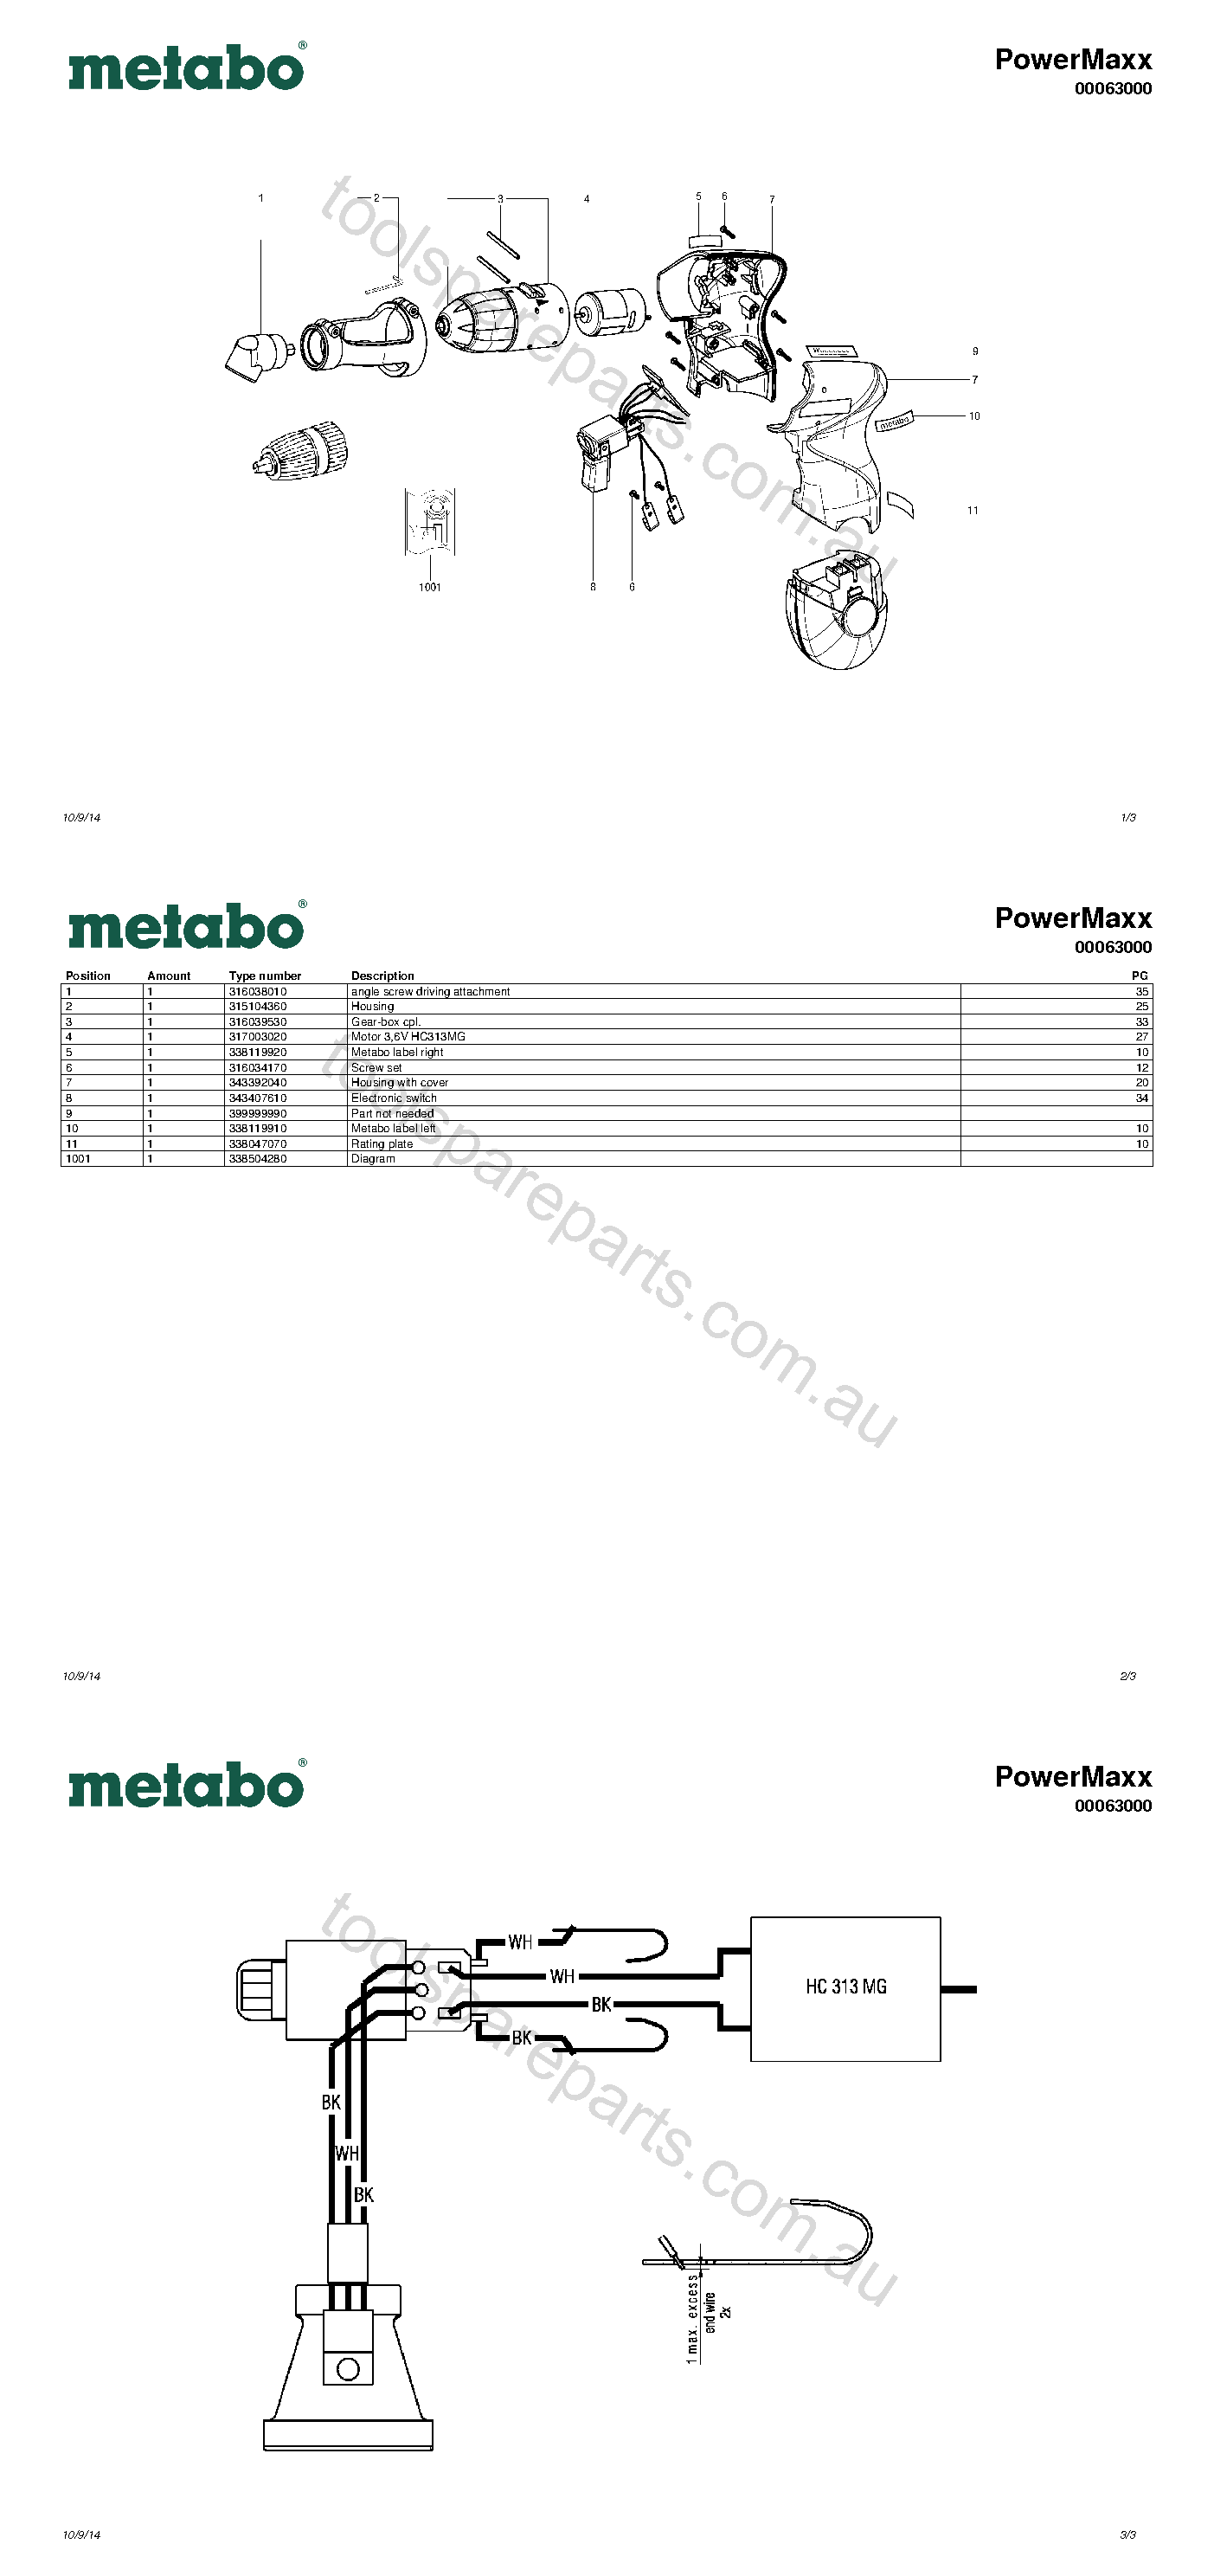 Metabo PowerMaxx 00063000  Diagram 1